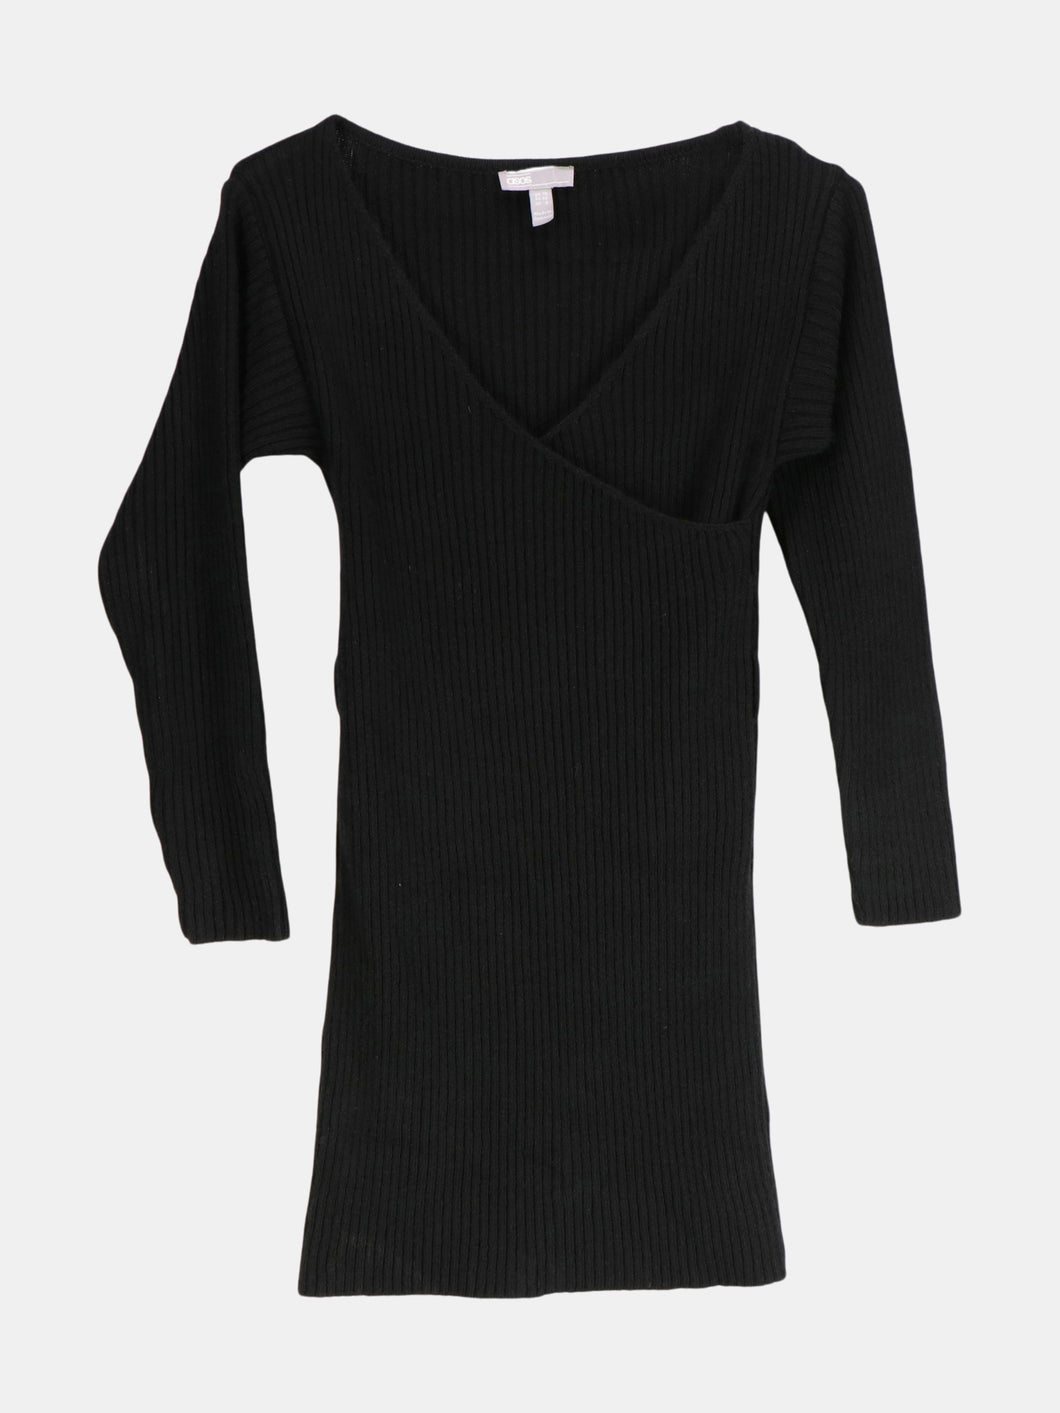 Asos Women's Black Vero Moda Tall Knitted Wrap Sweater Dress